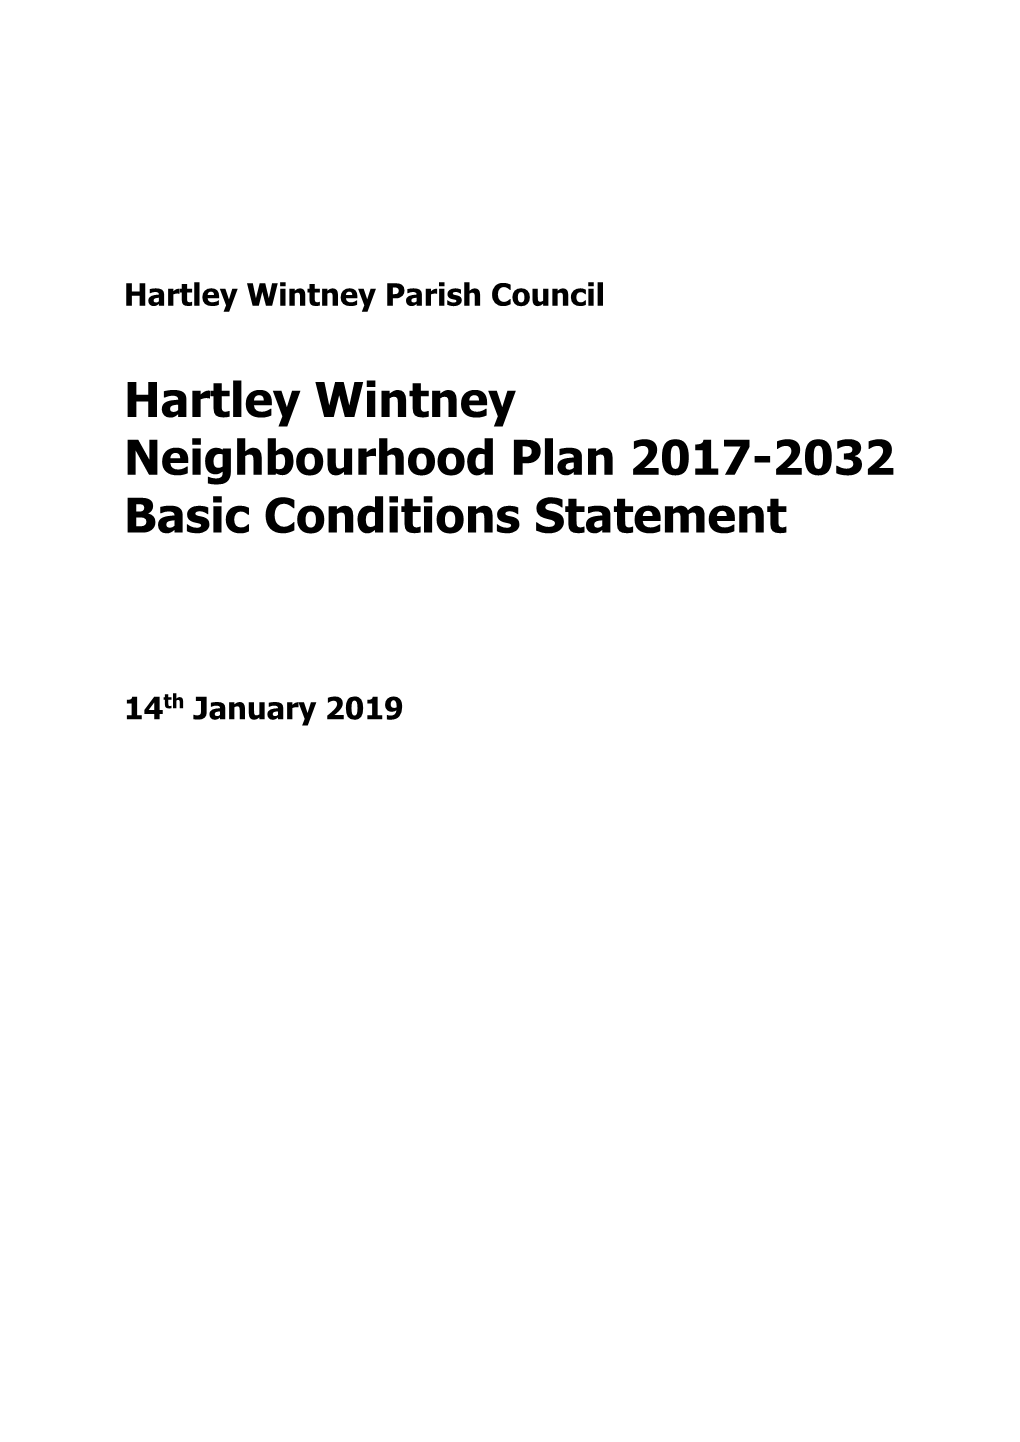 Hartley Wintney Neighbourhood Plan 2017-2032 Basic Conditions Statement